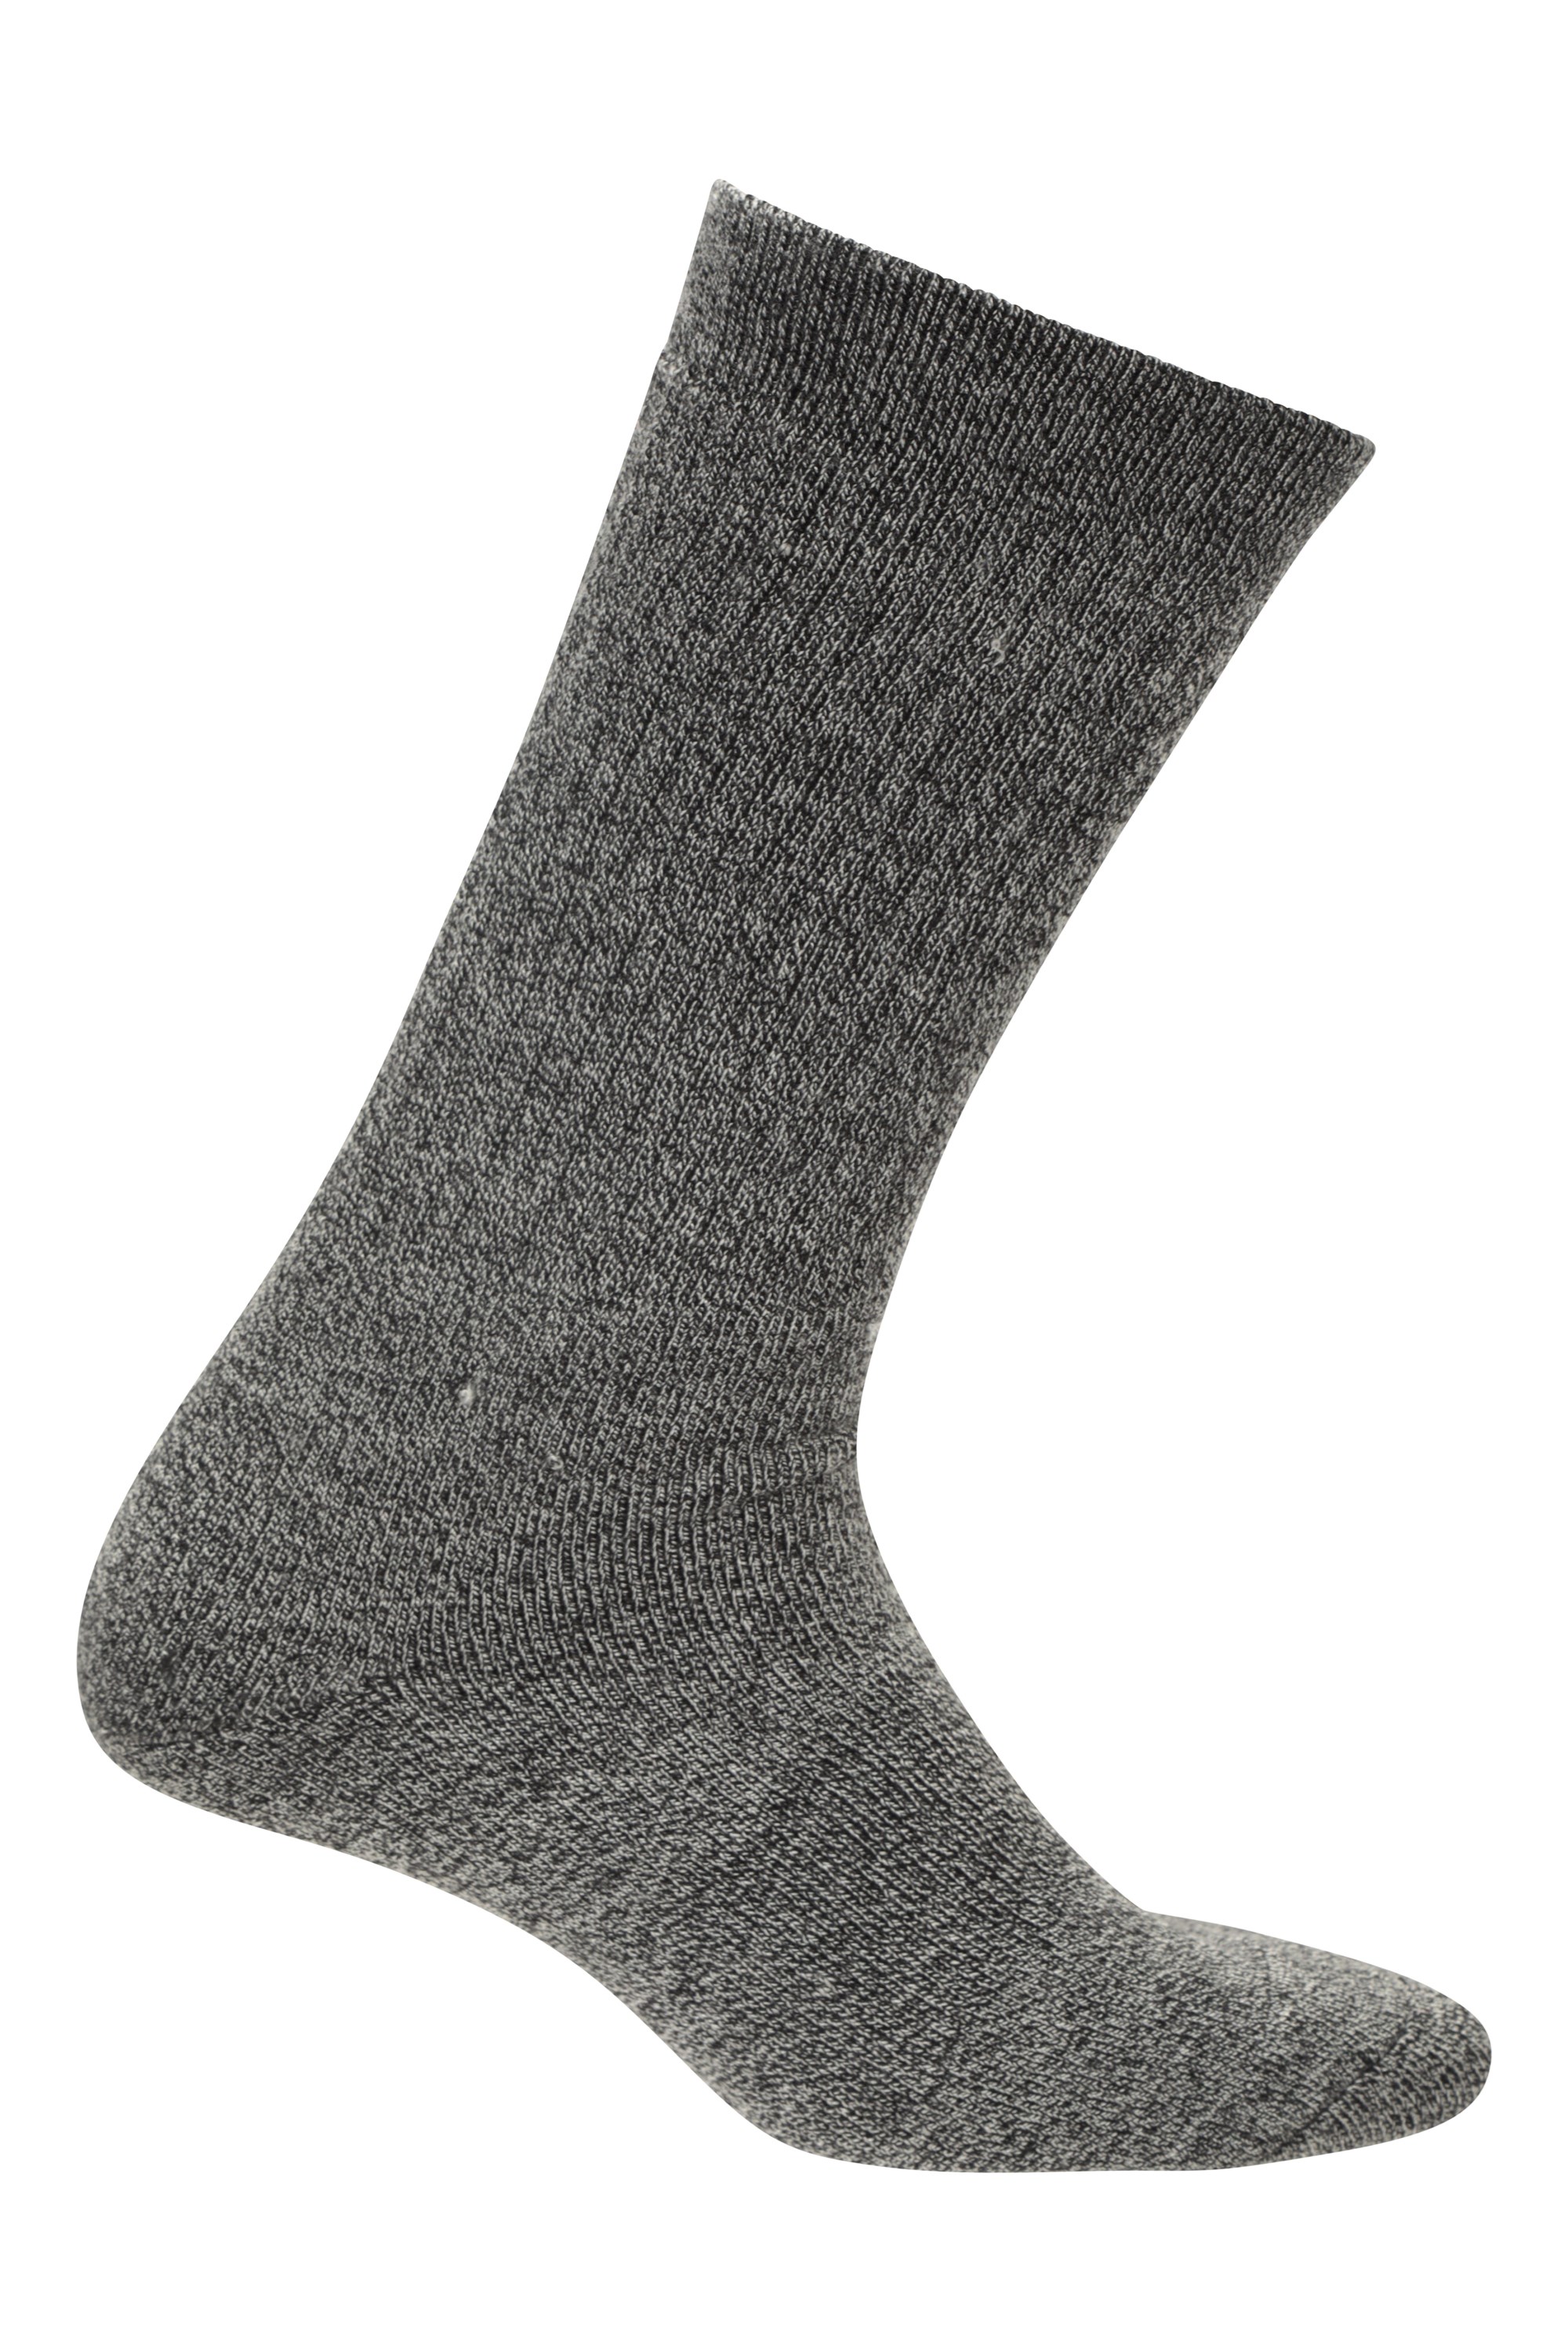 Melange Mens Hiking Socks - Grey